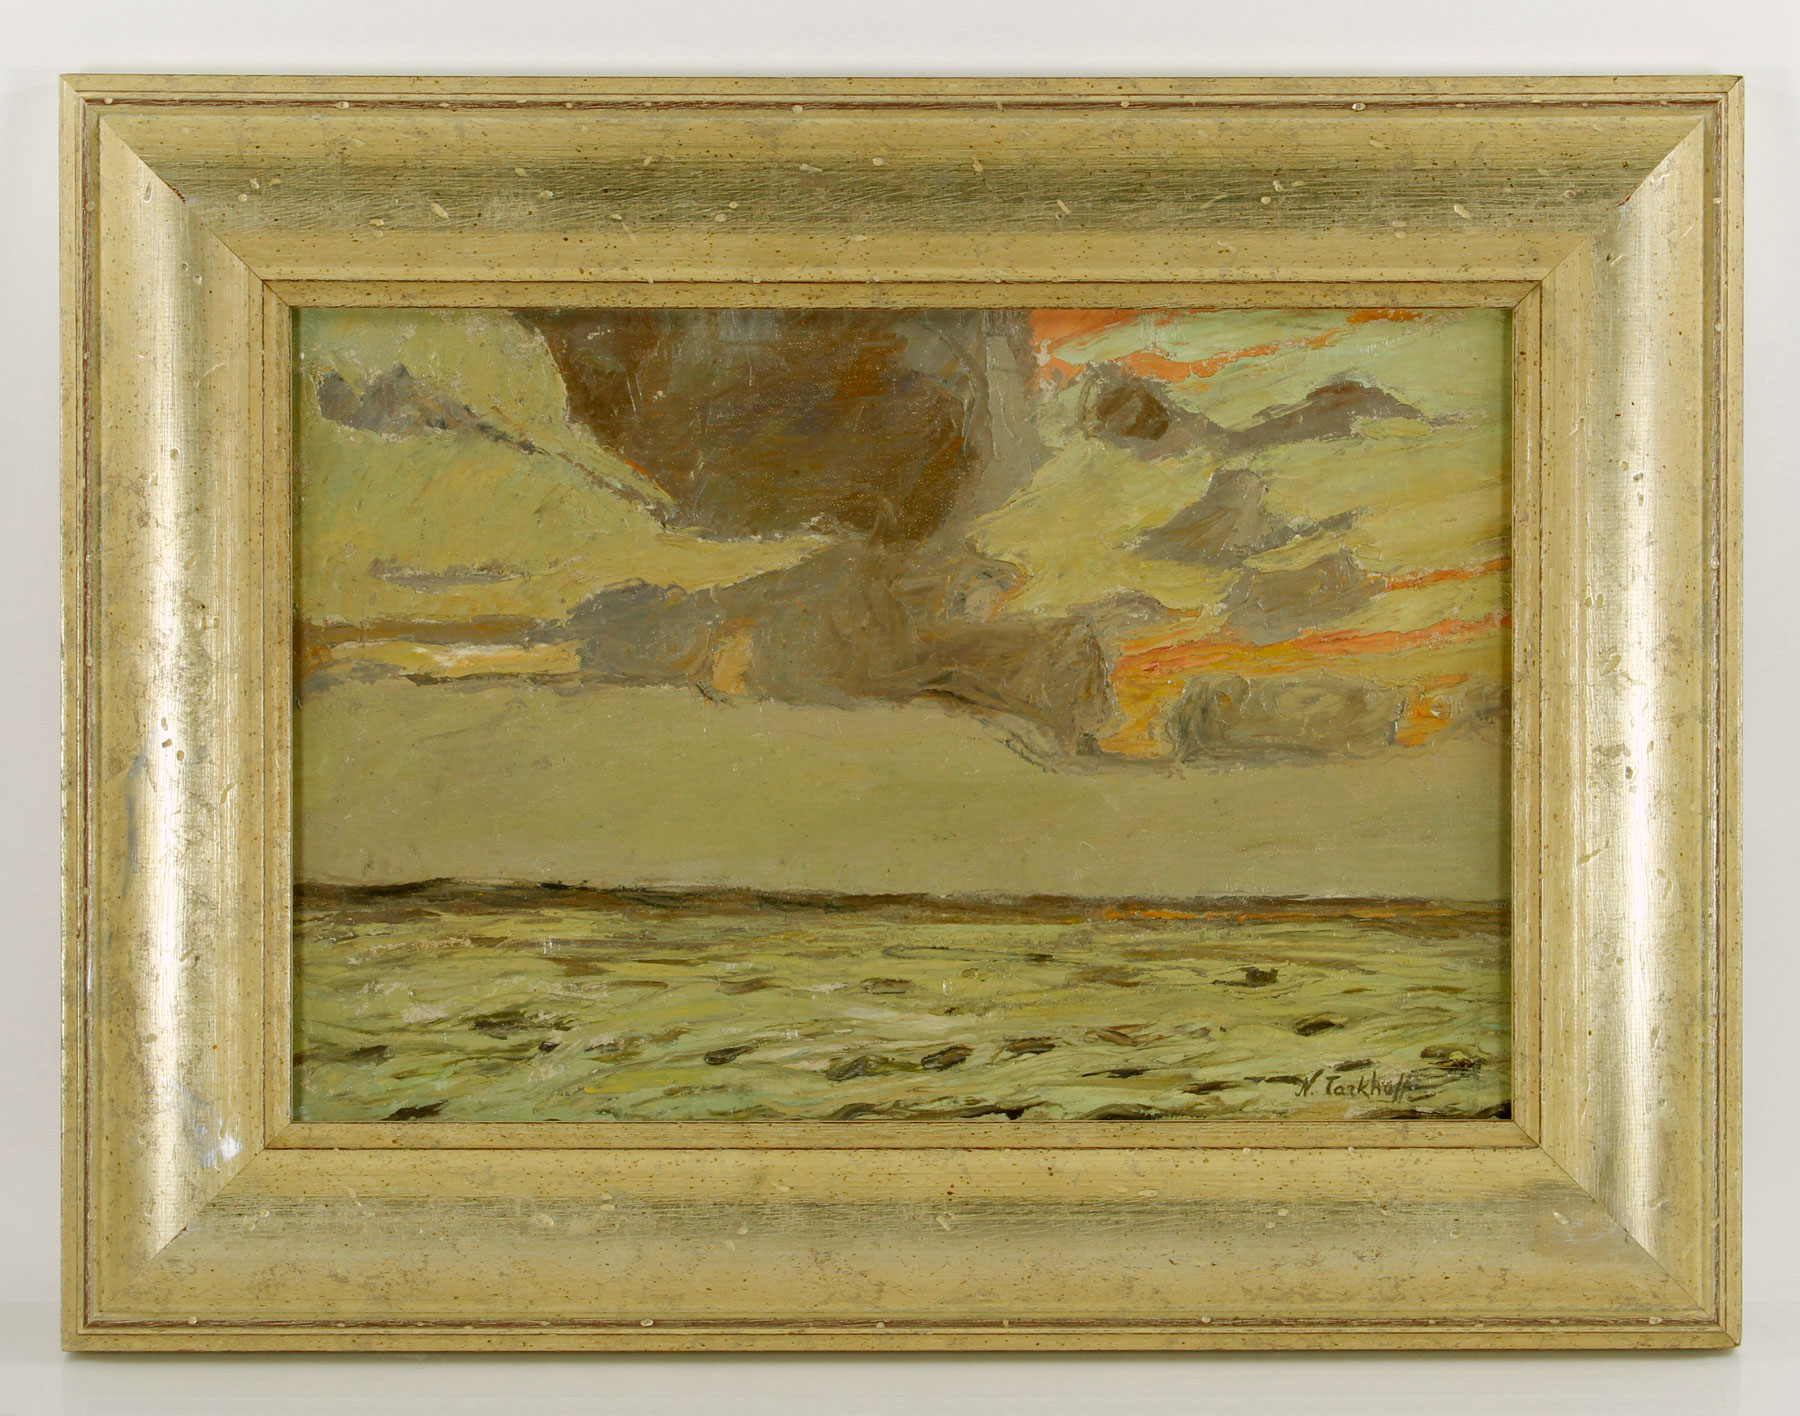 Nicolas Tarkhoff (Russian, 1871-1930), seascape at sunset, oil on canvas laid on board